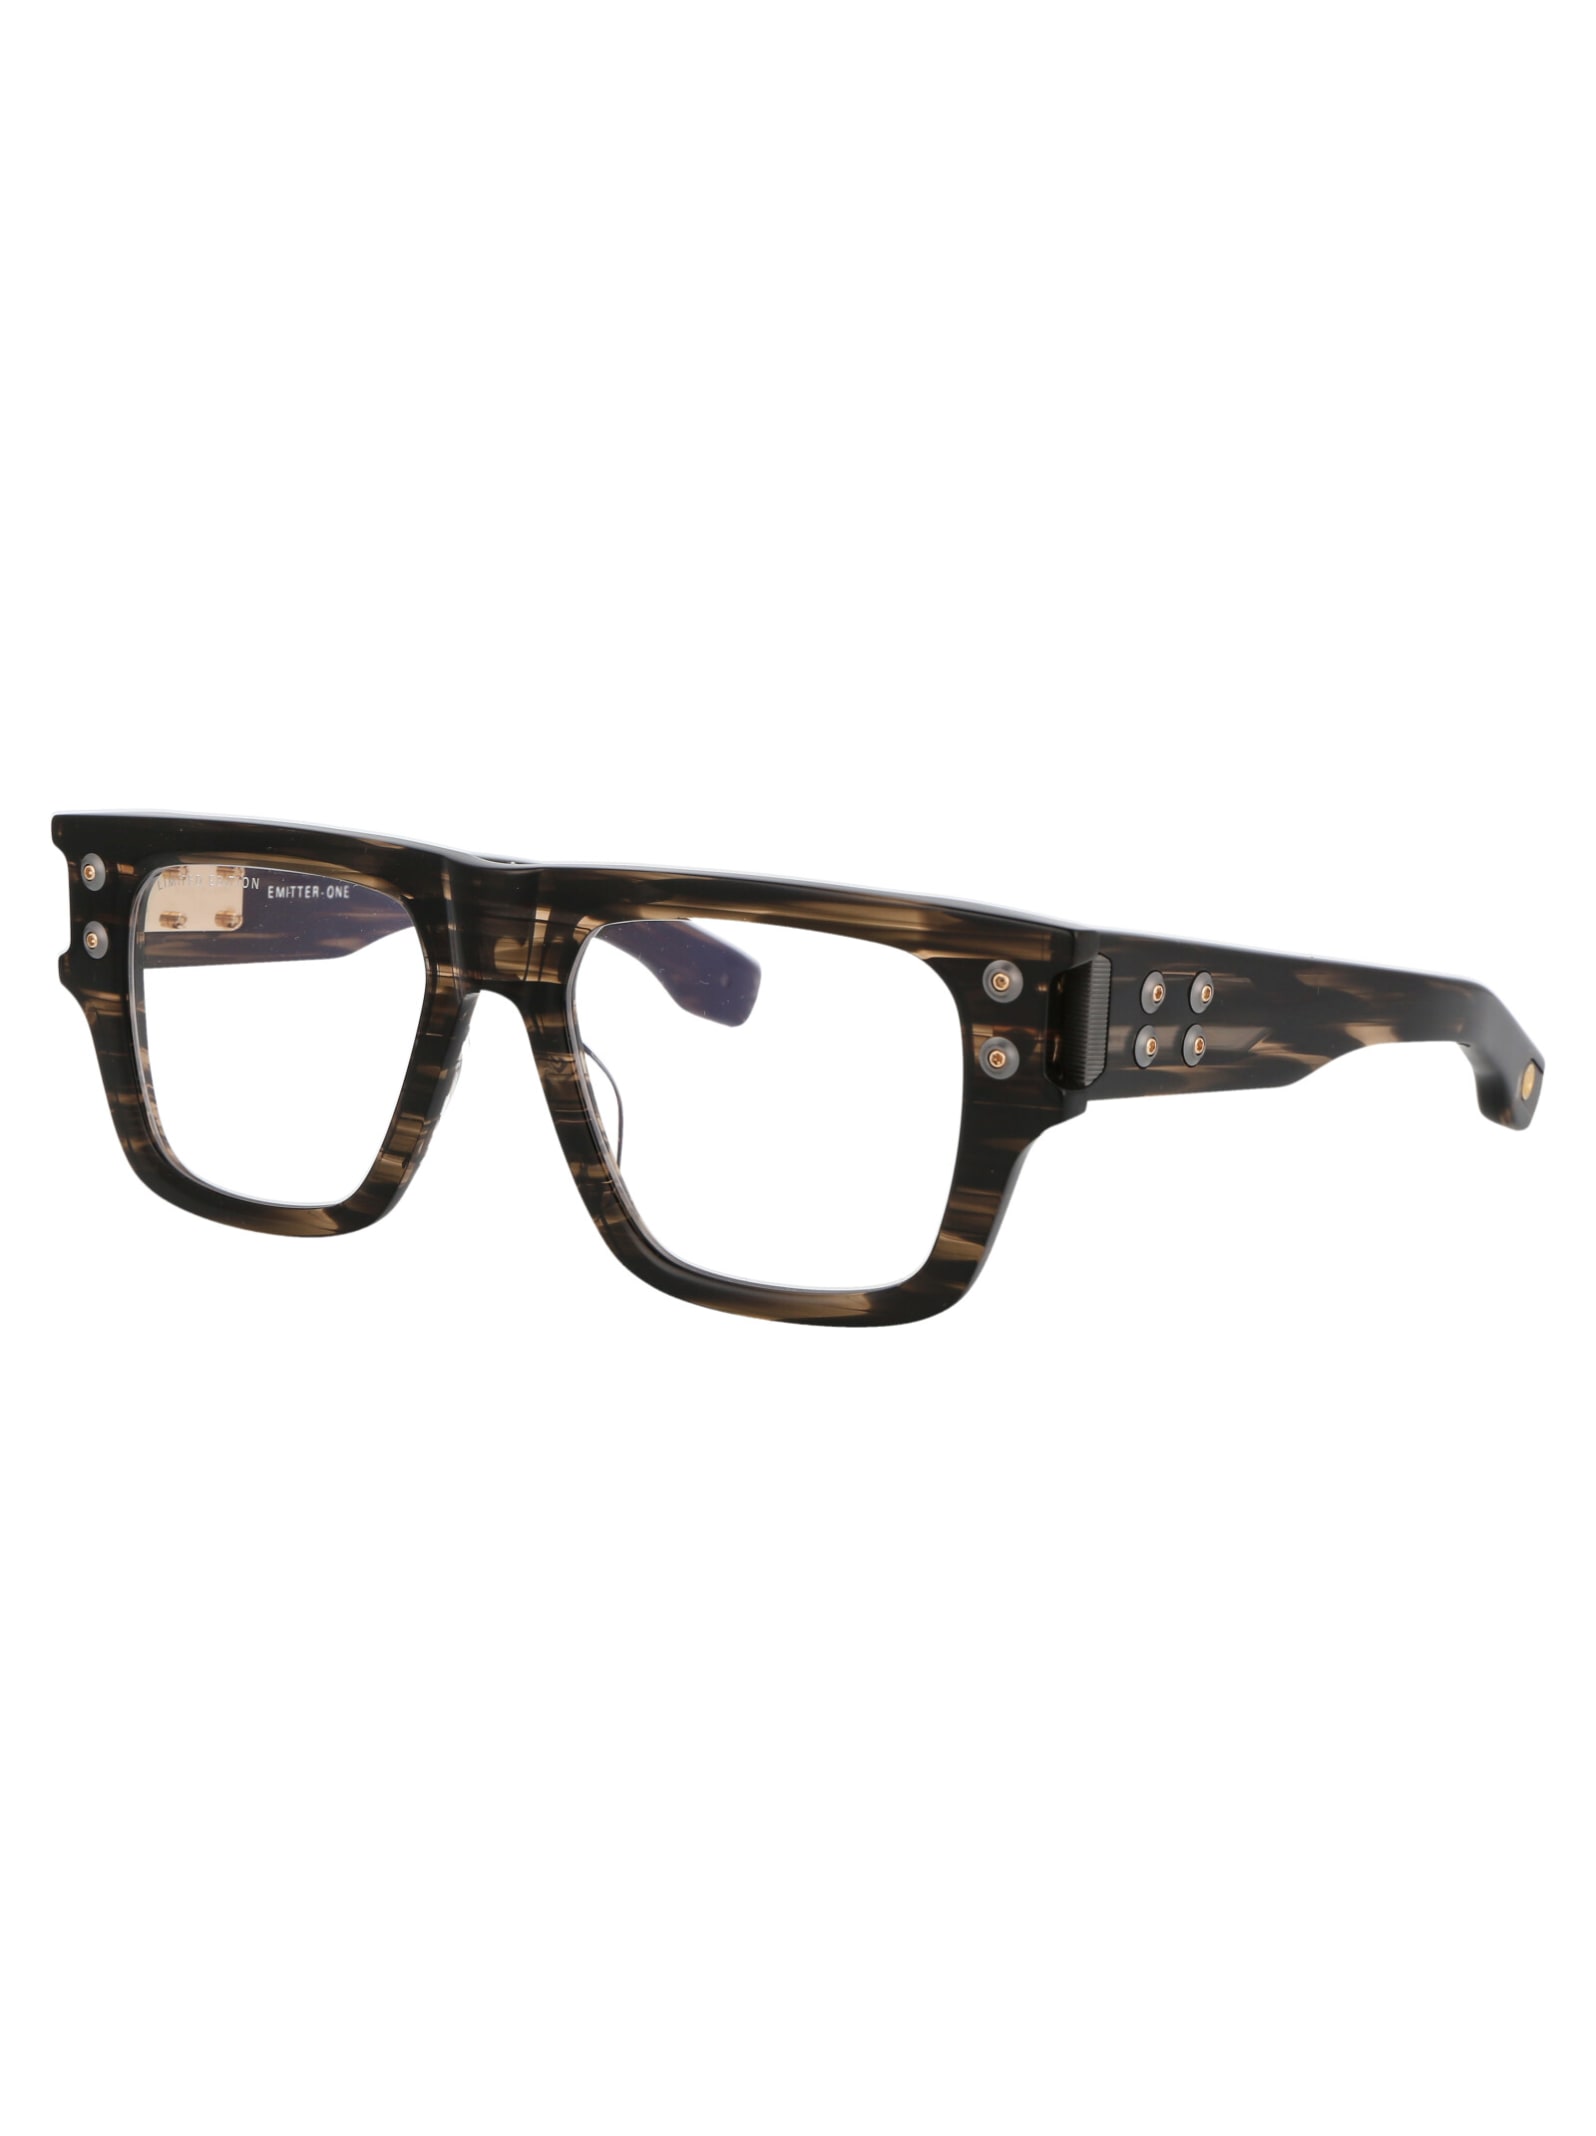 Shop Dita Emitter-one Glasses In Burnt Timber - Black Iron